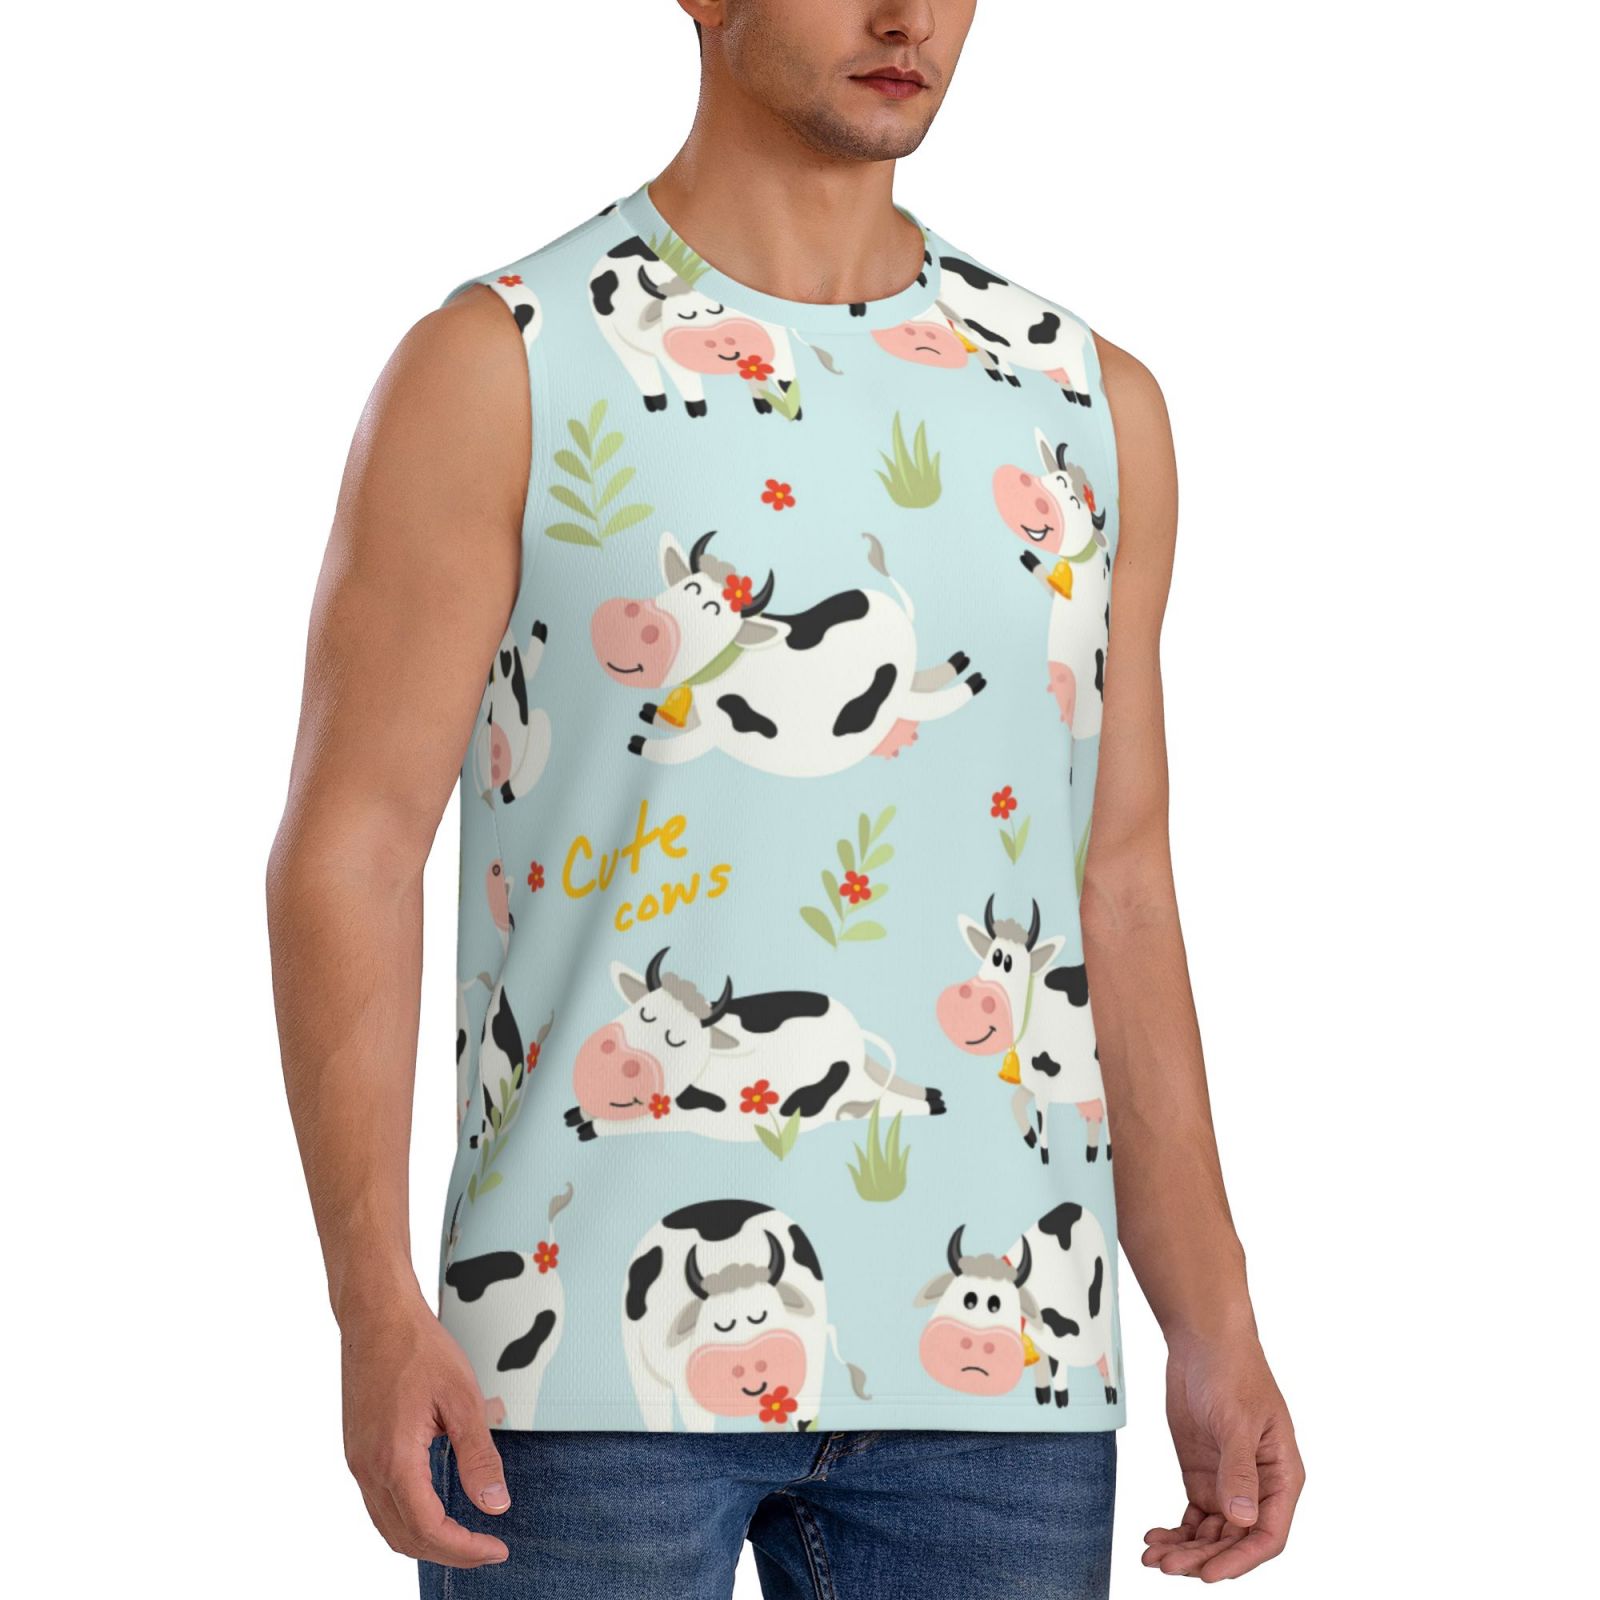 Lsque Cute Cows Print Men's Cotton Blend Sleeveless Muscle Shirts (S ...